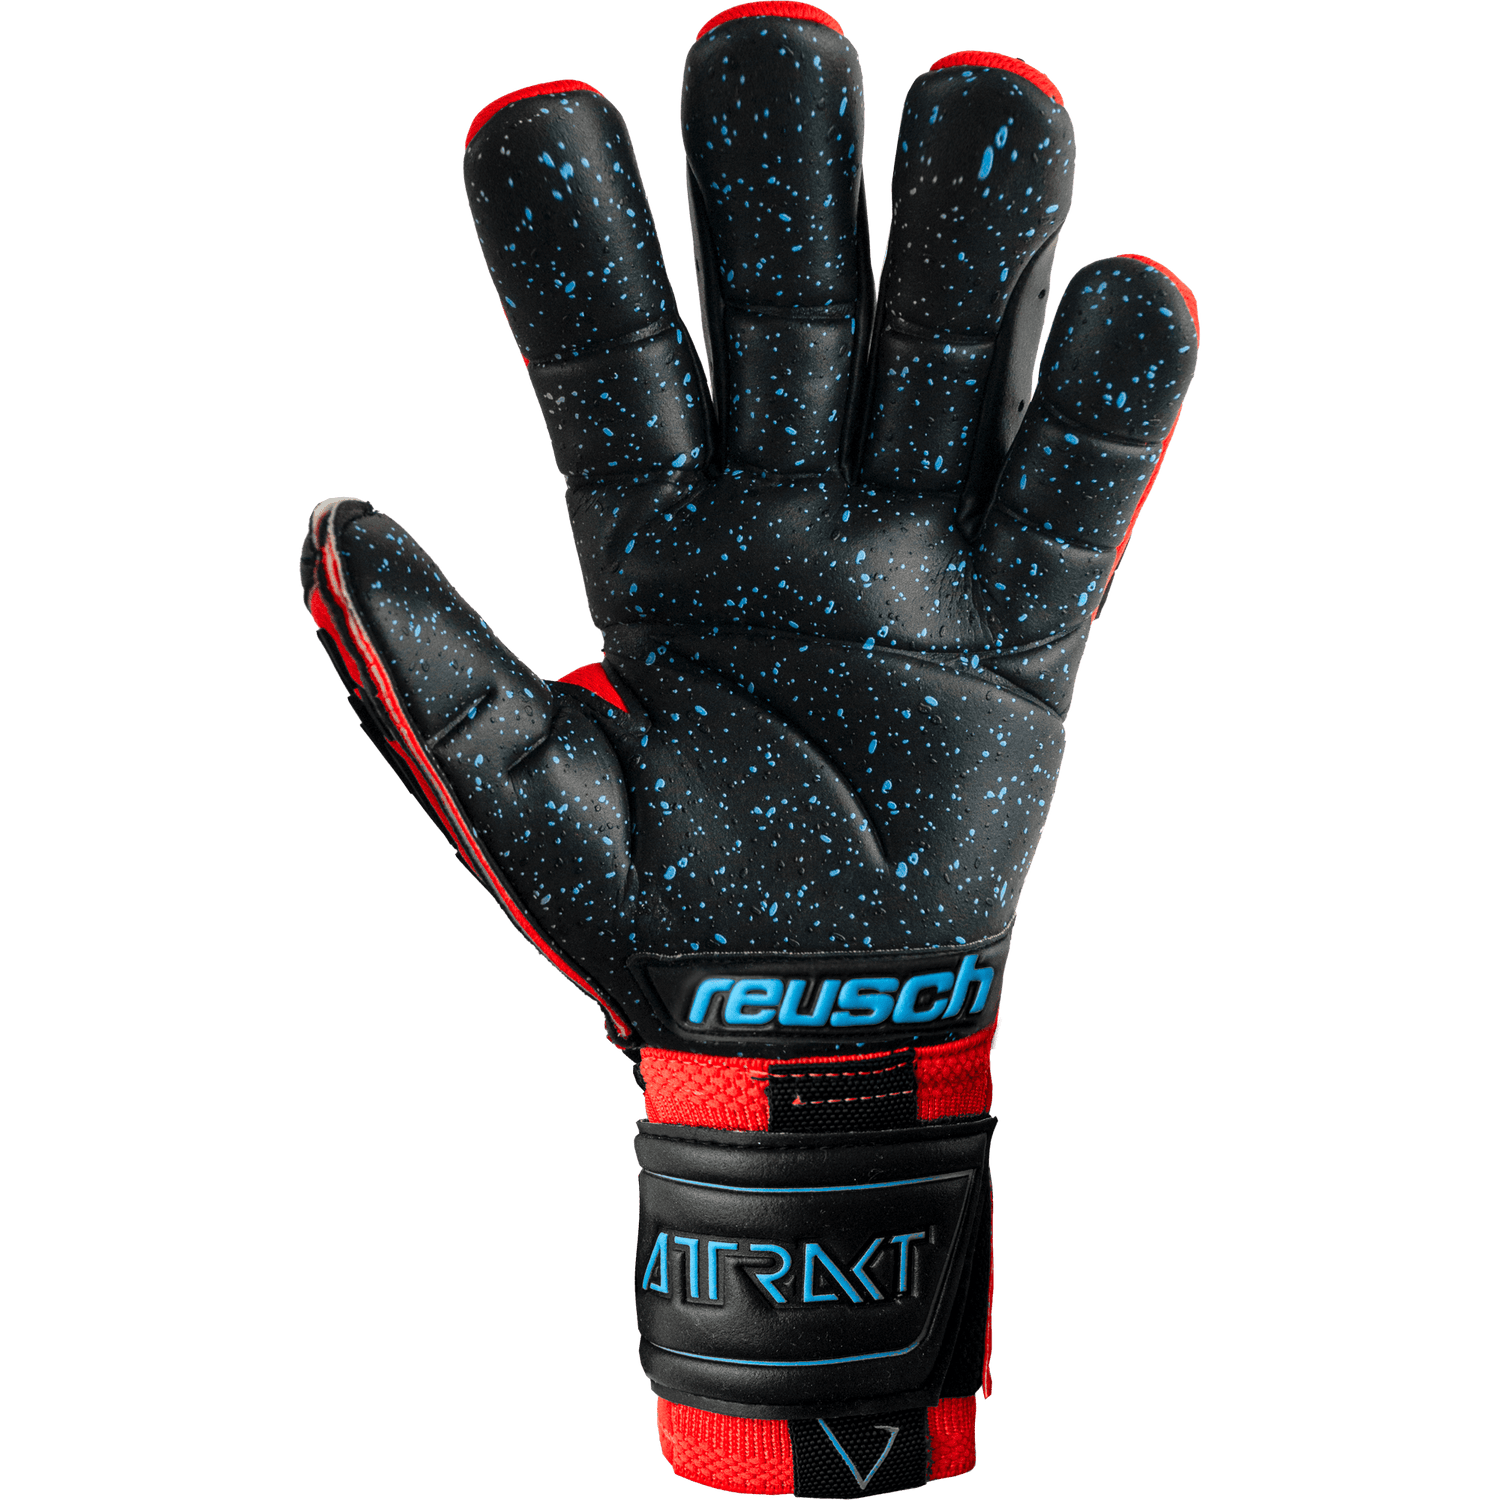 Reusch Attrakt Freegel Fusion Ortho-Tec Goaliator Goalkeeper Gloves - Bright Red-Black (Single - Inner)